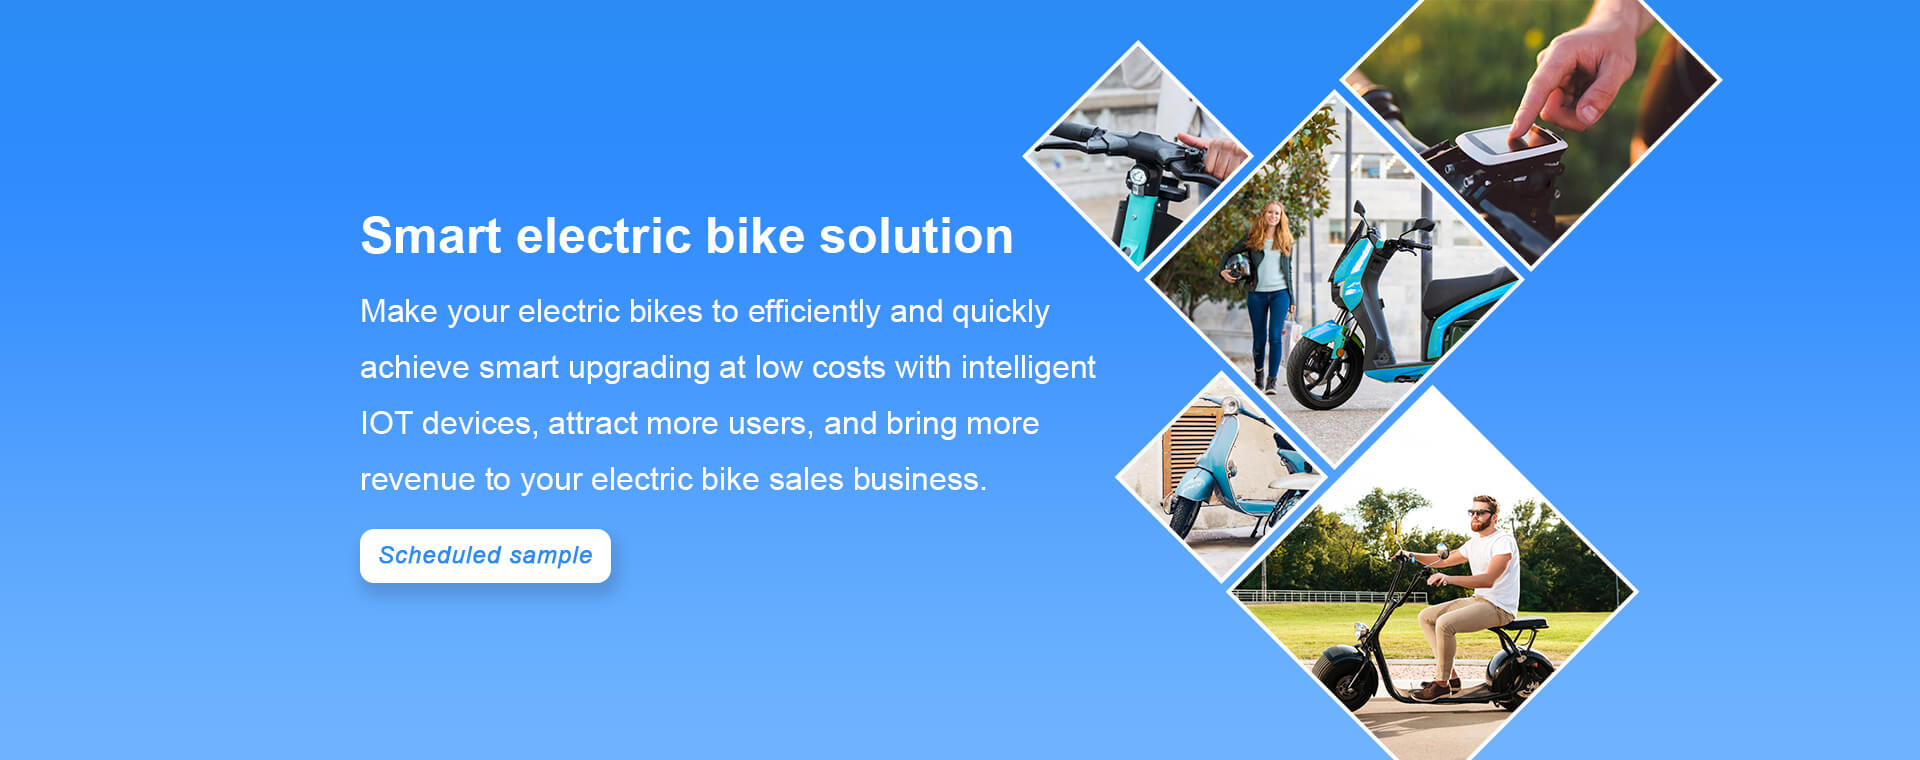 bicicleta elétrica inteligente